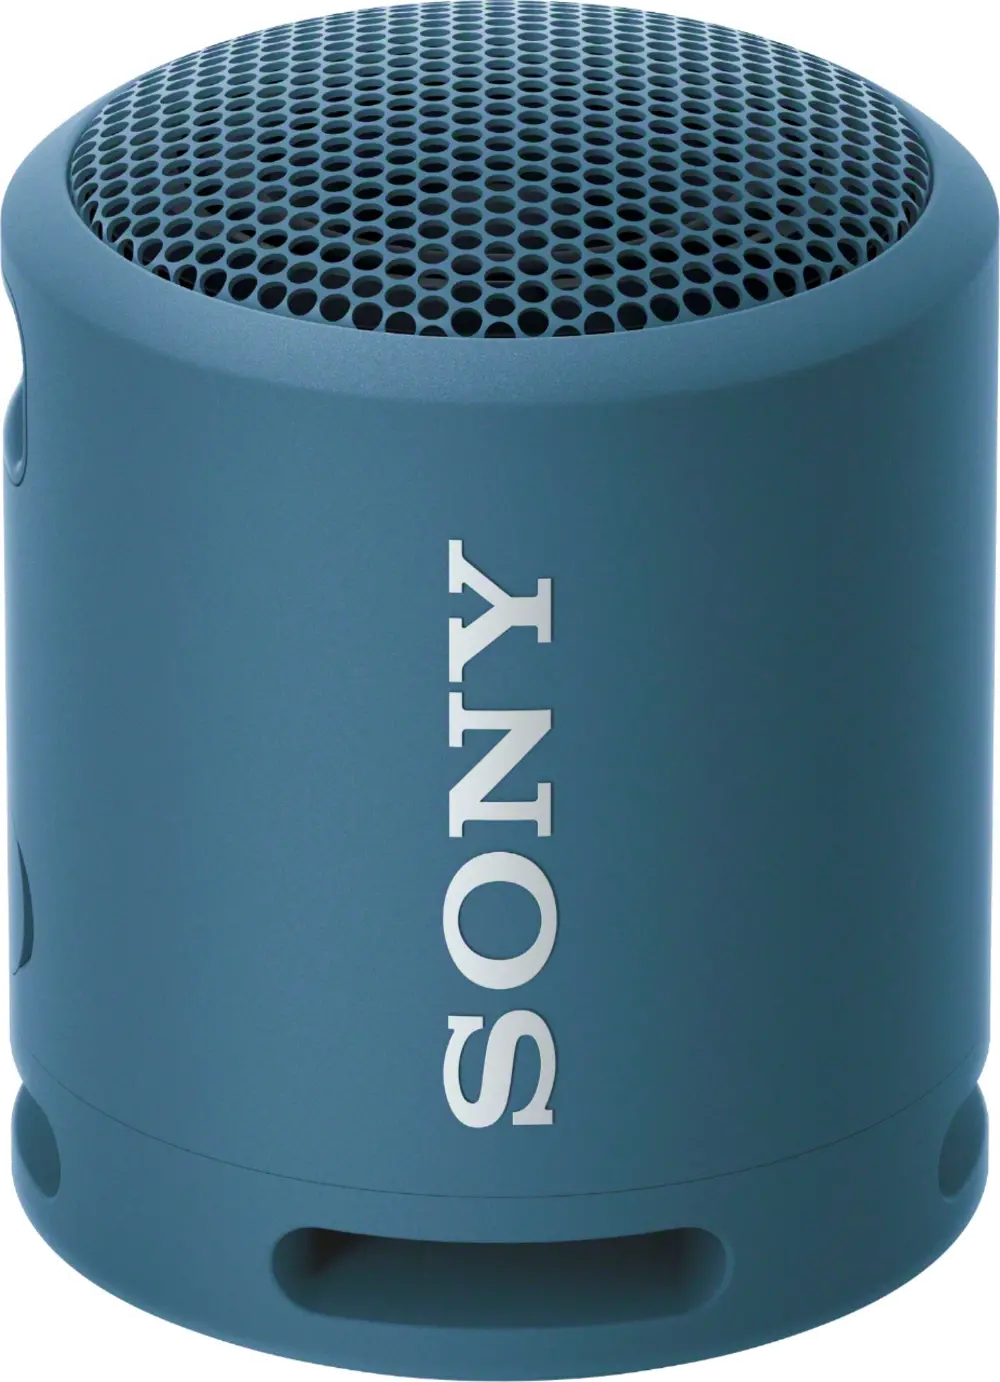 SRSXB13/LZ Sony XB13 Portable Bluetooth Speaker - Blue-1